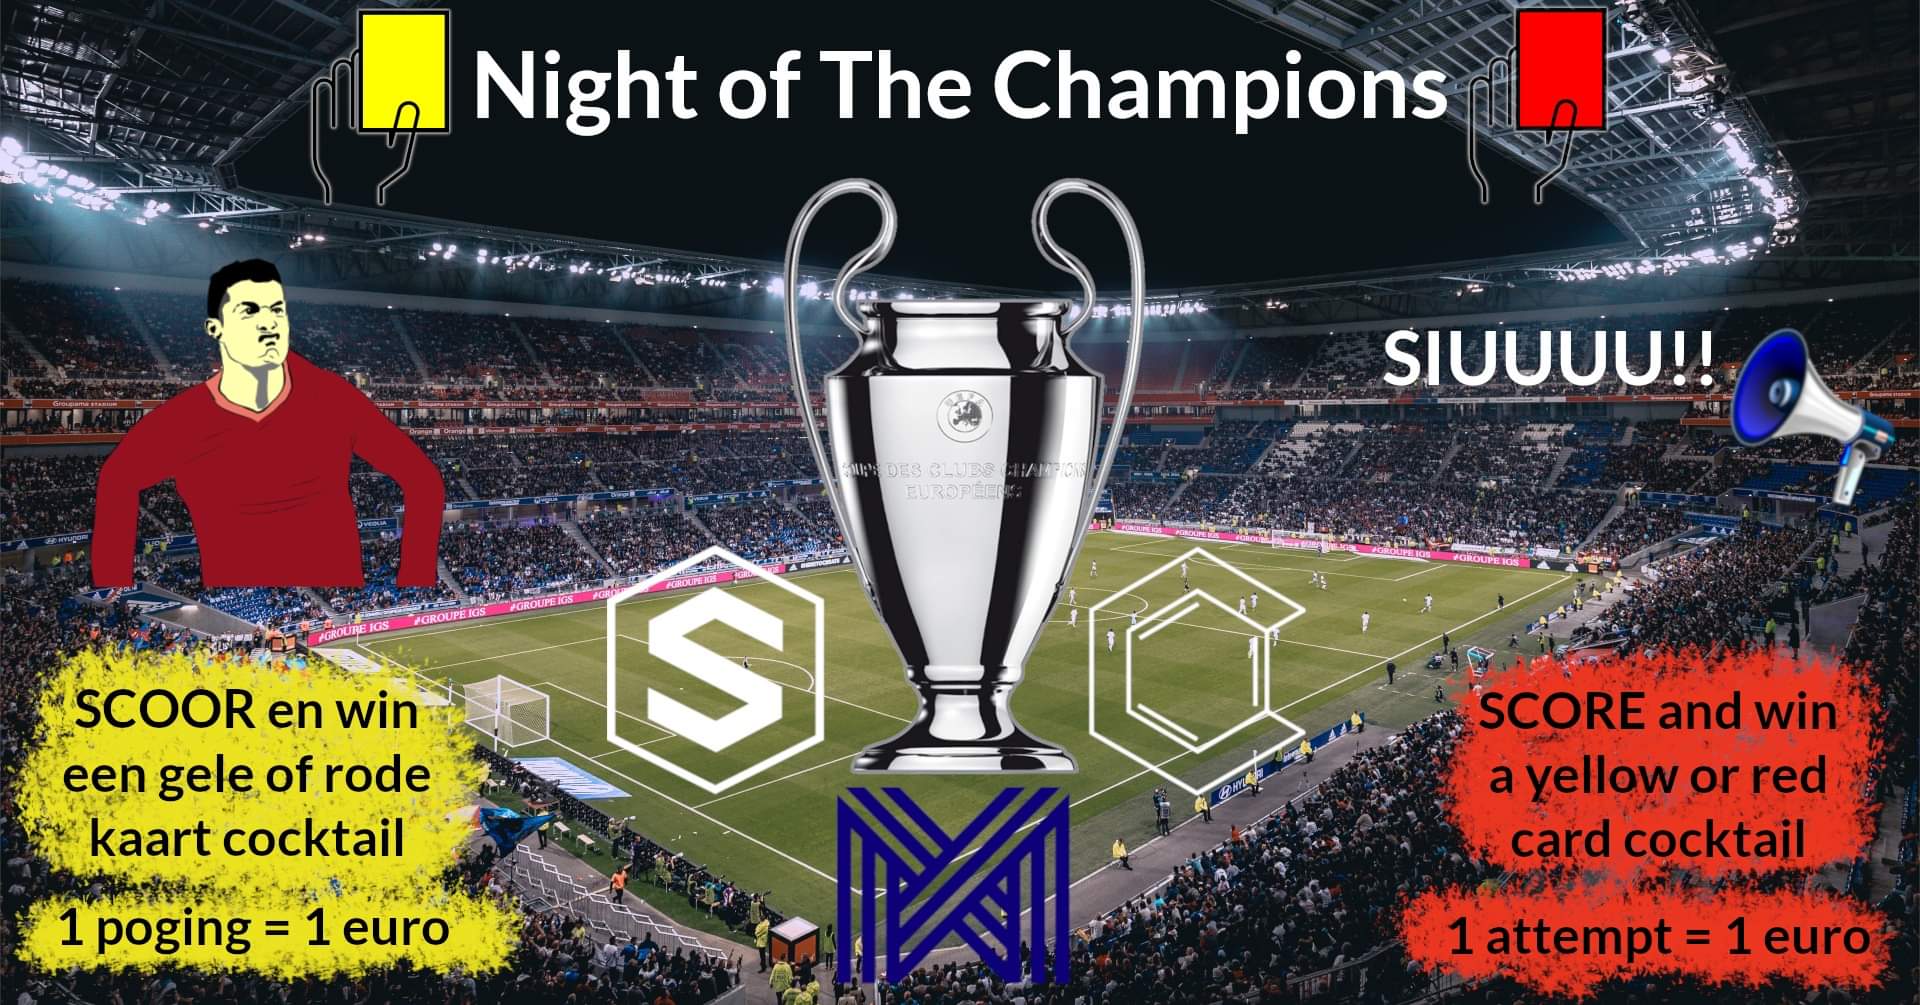 Fakfeest Night of The Champions Image